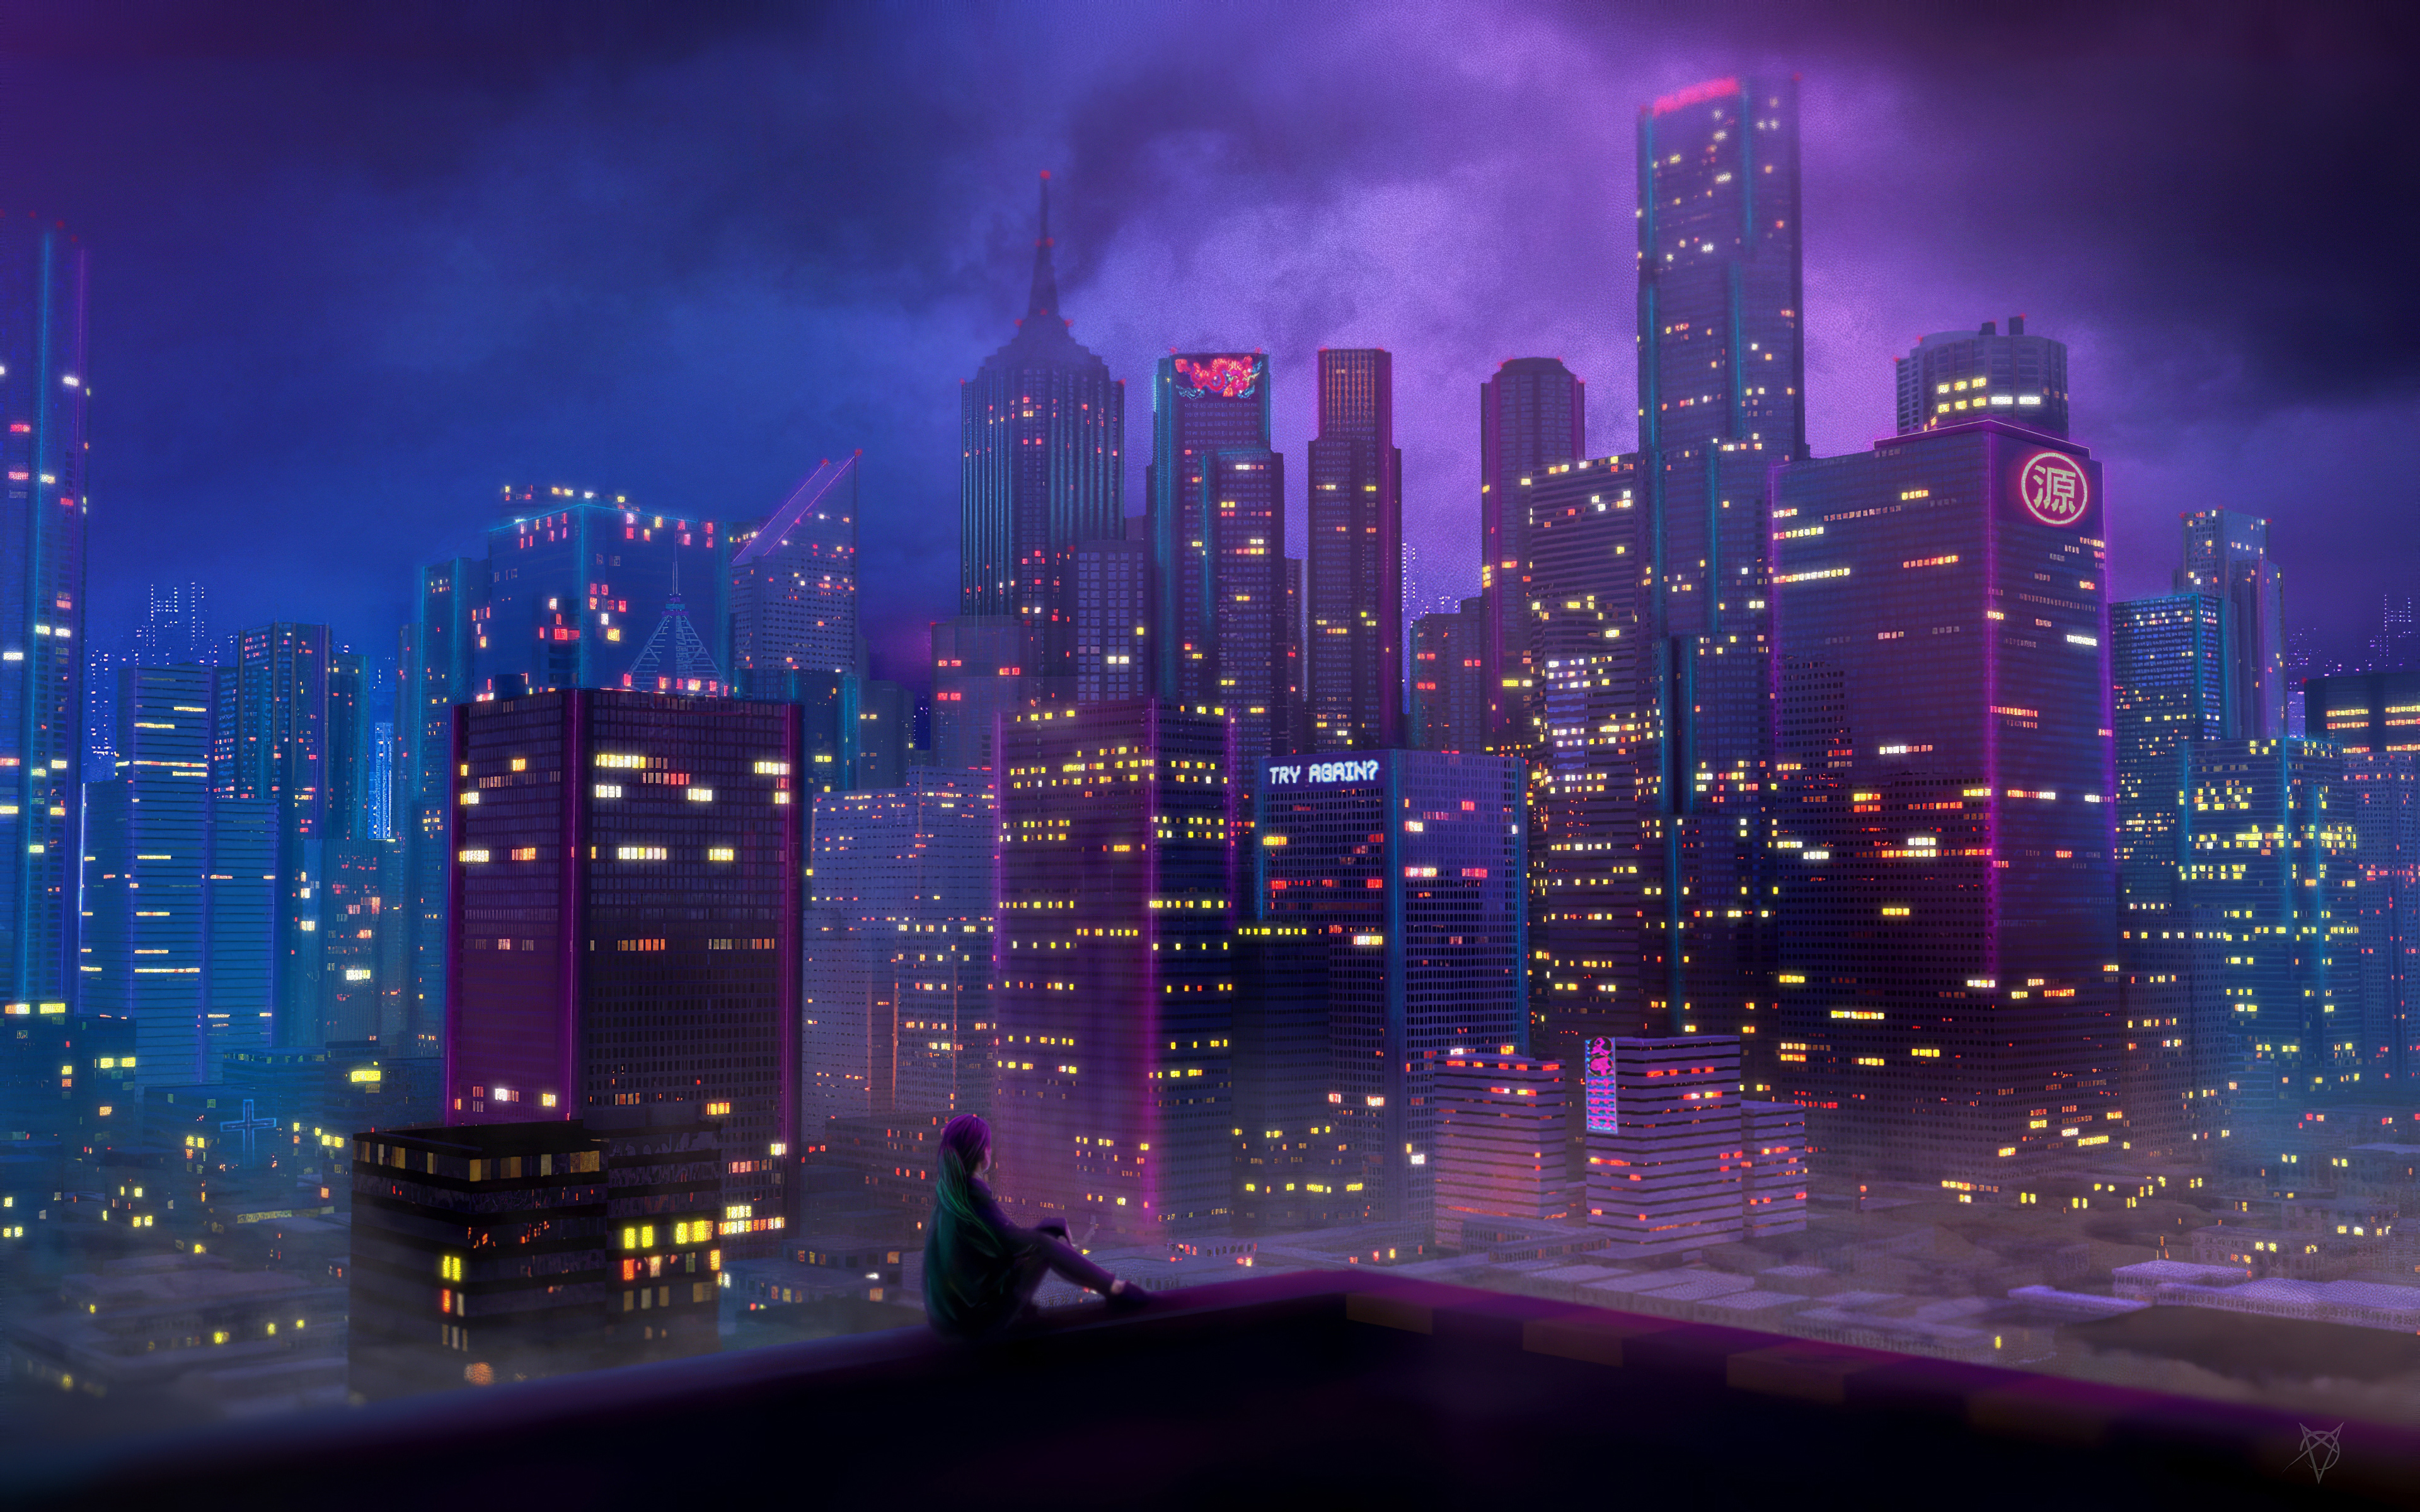 HD desktop wallpaper Anime City Building Sci Fi Original download free  picture 860159